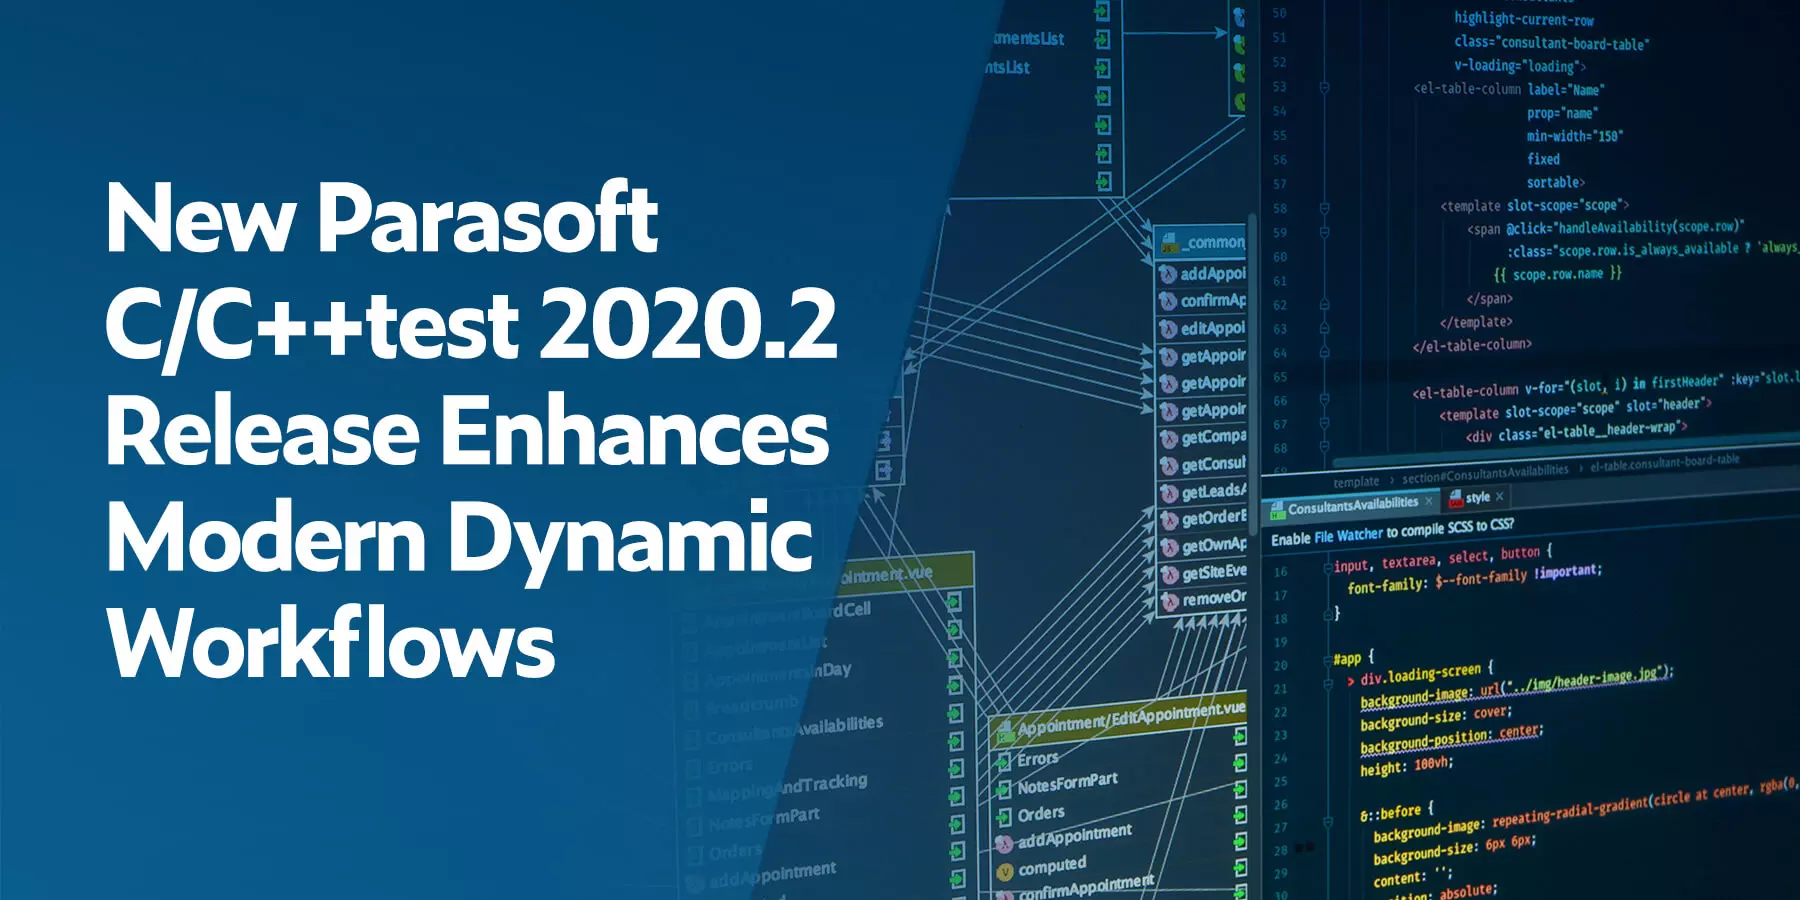 New Parasoft C/C++test 2020.2 Release Enhances Modern Dynamic Workflows